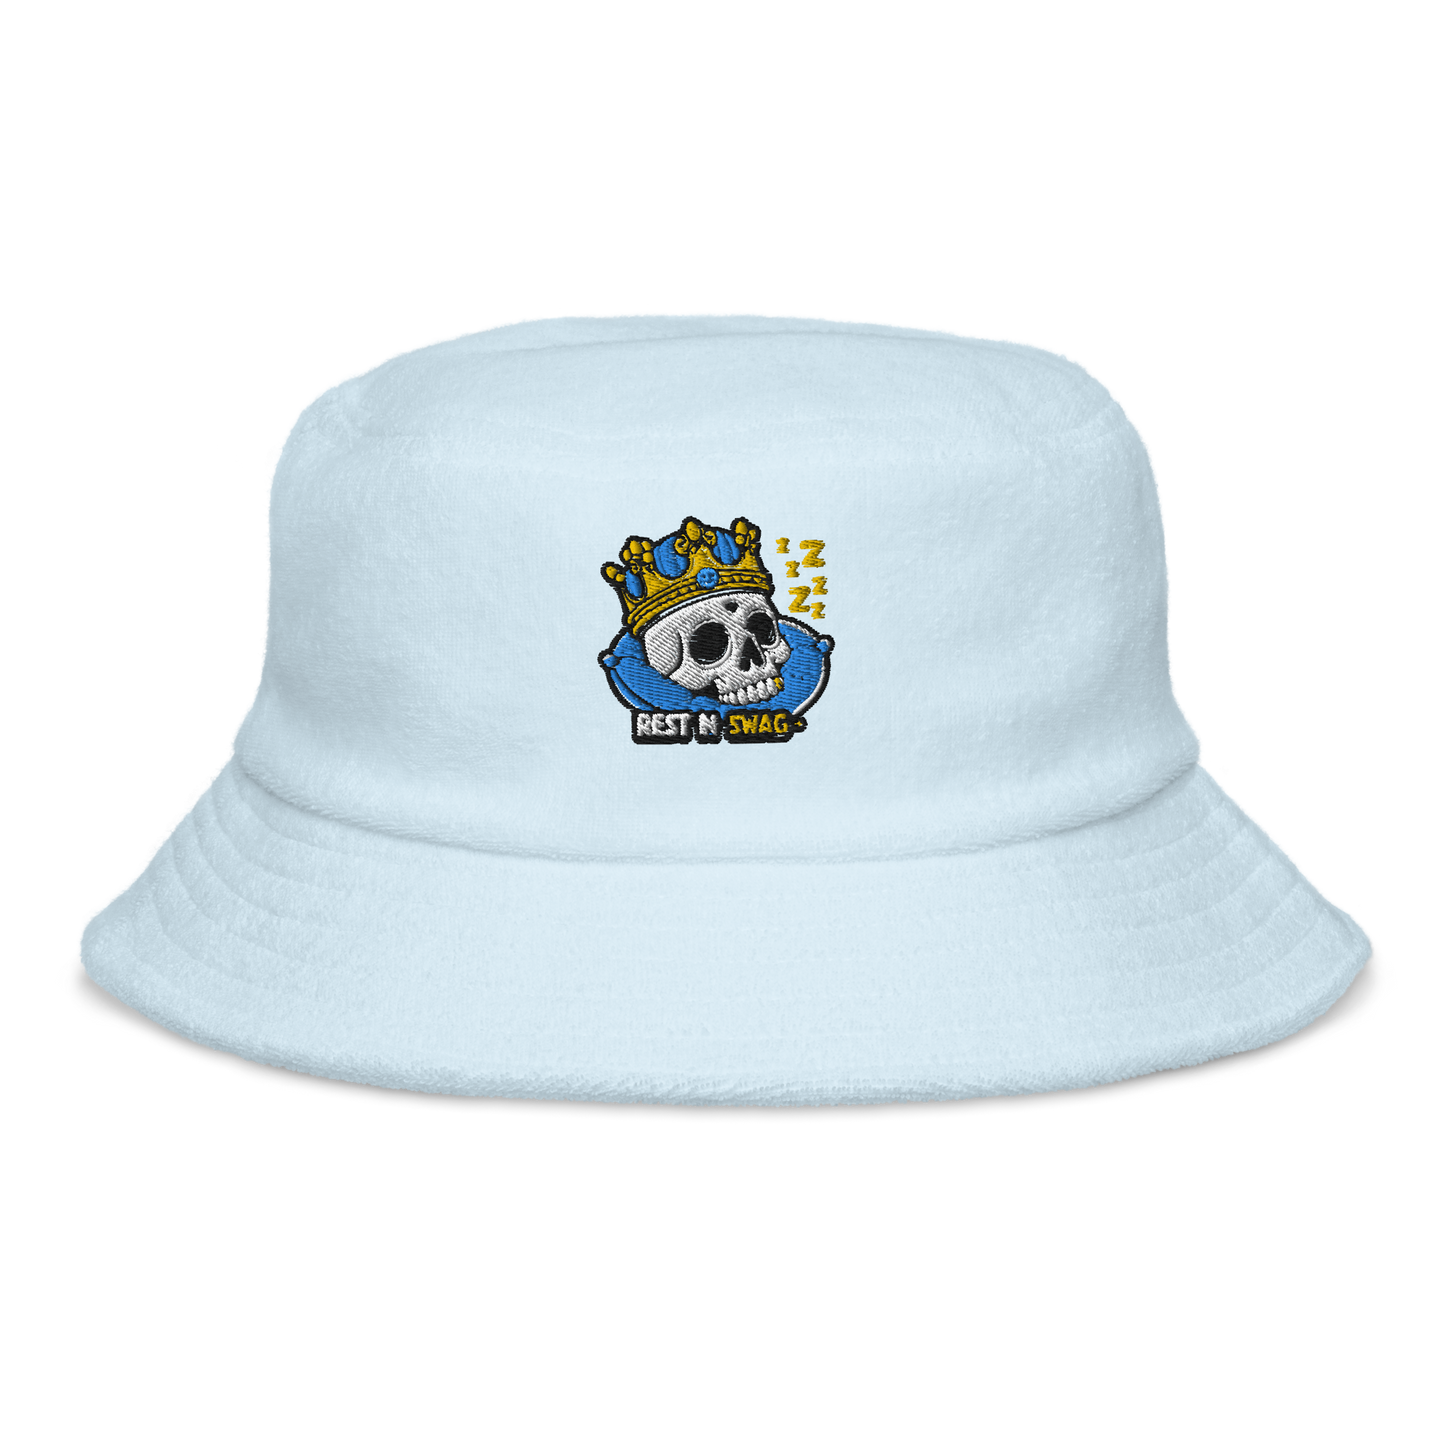 Rest N Swag Bucket Hat